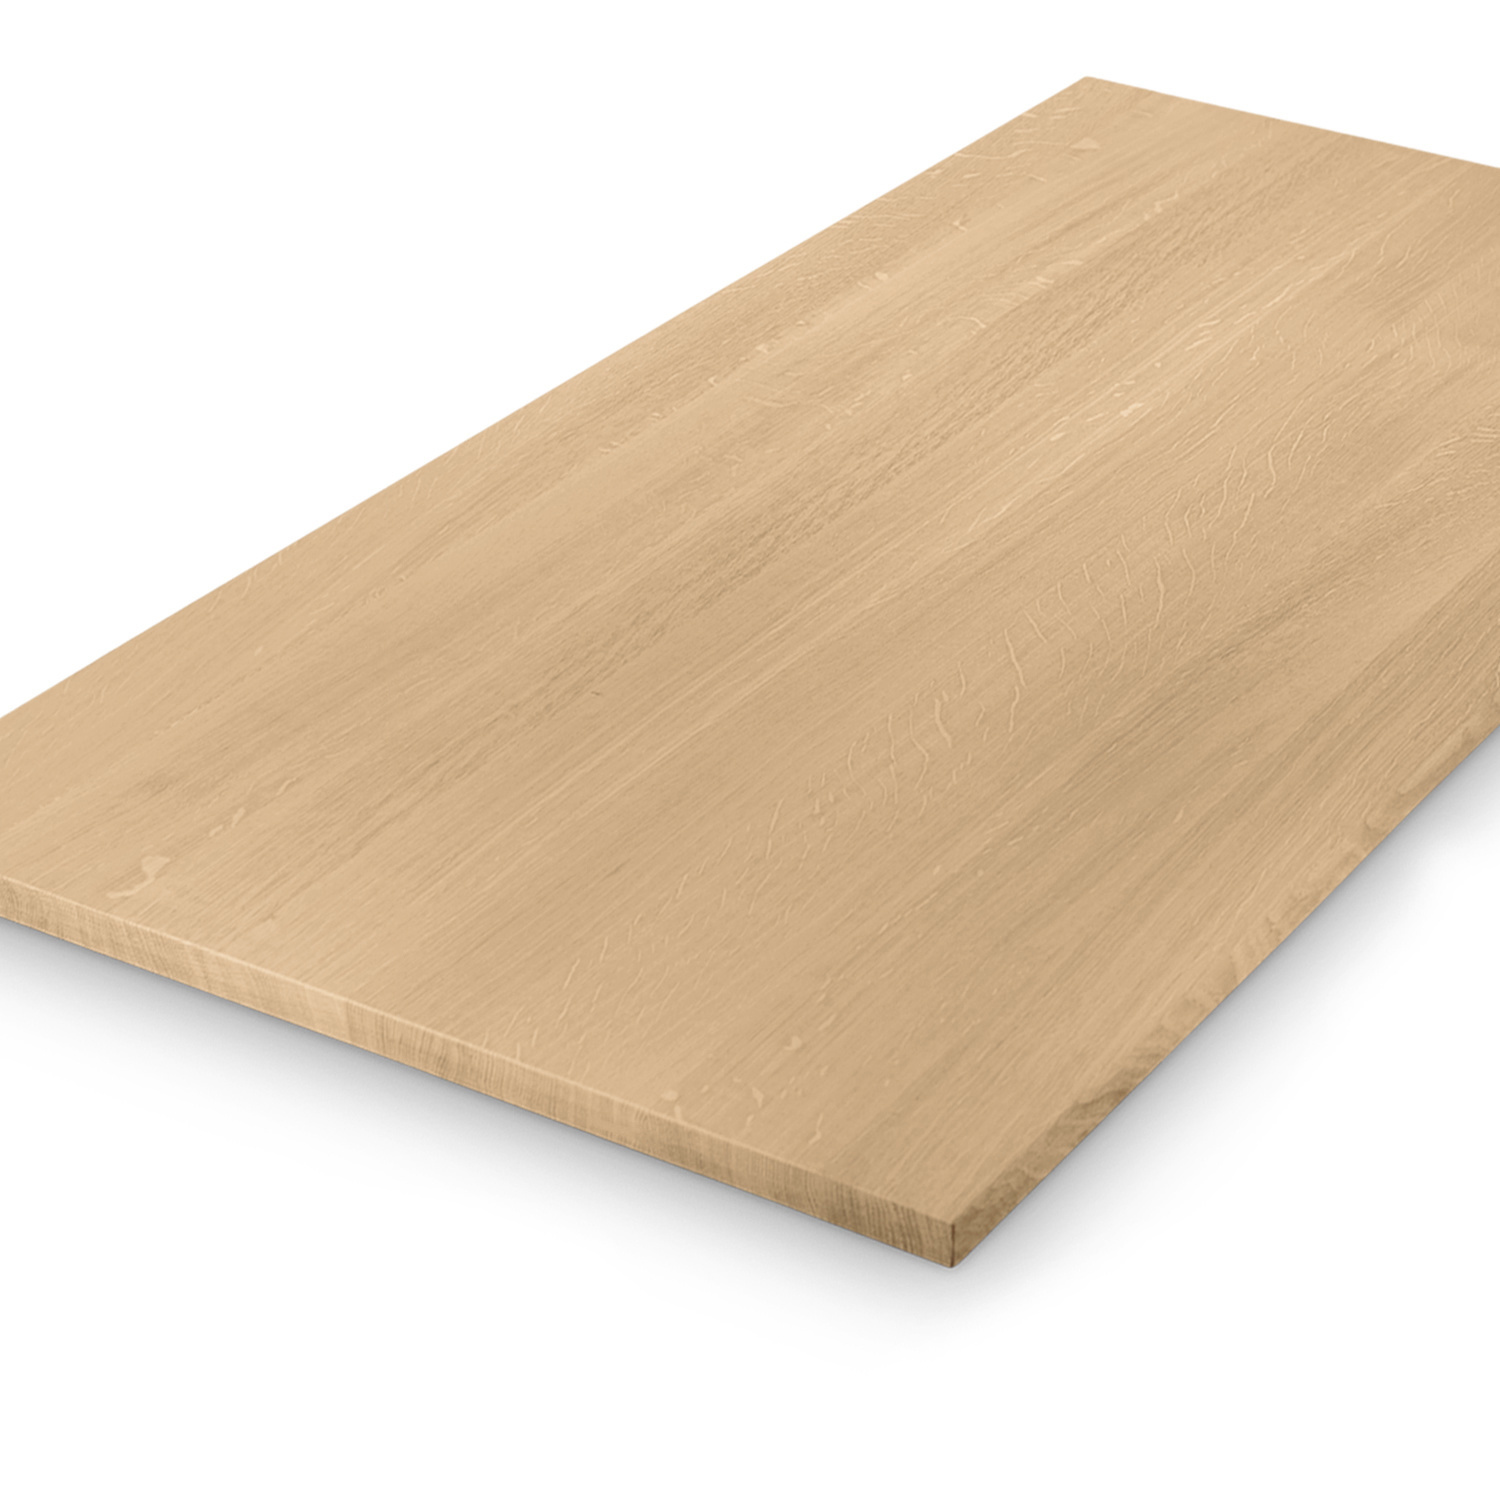  Eiken tafelblad - 2,7 cm dik (1-laag) - Diverse afmetingen - foutvrij Europees eikenhout - met brede lamellen (circa 10-12 cm) - verlijmd kd 8-12%